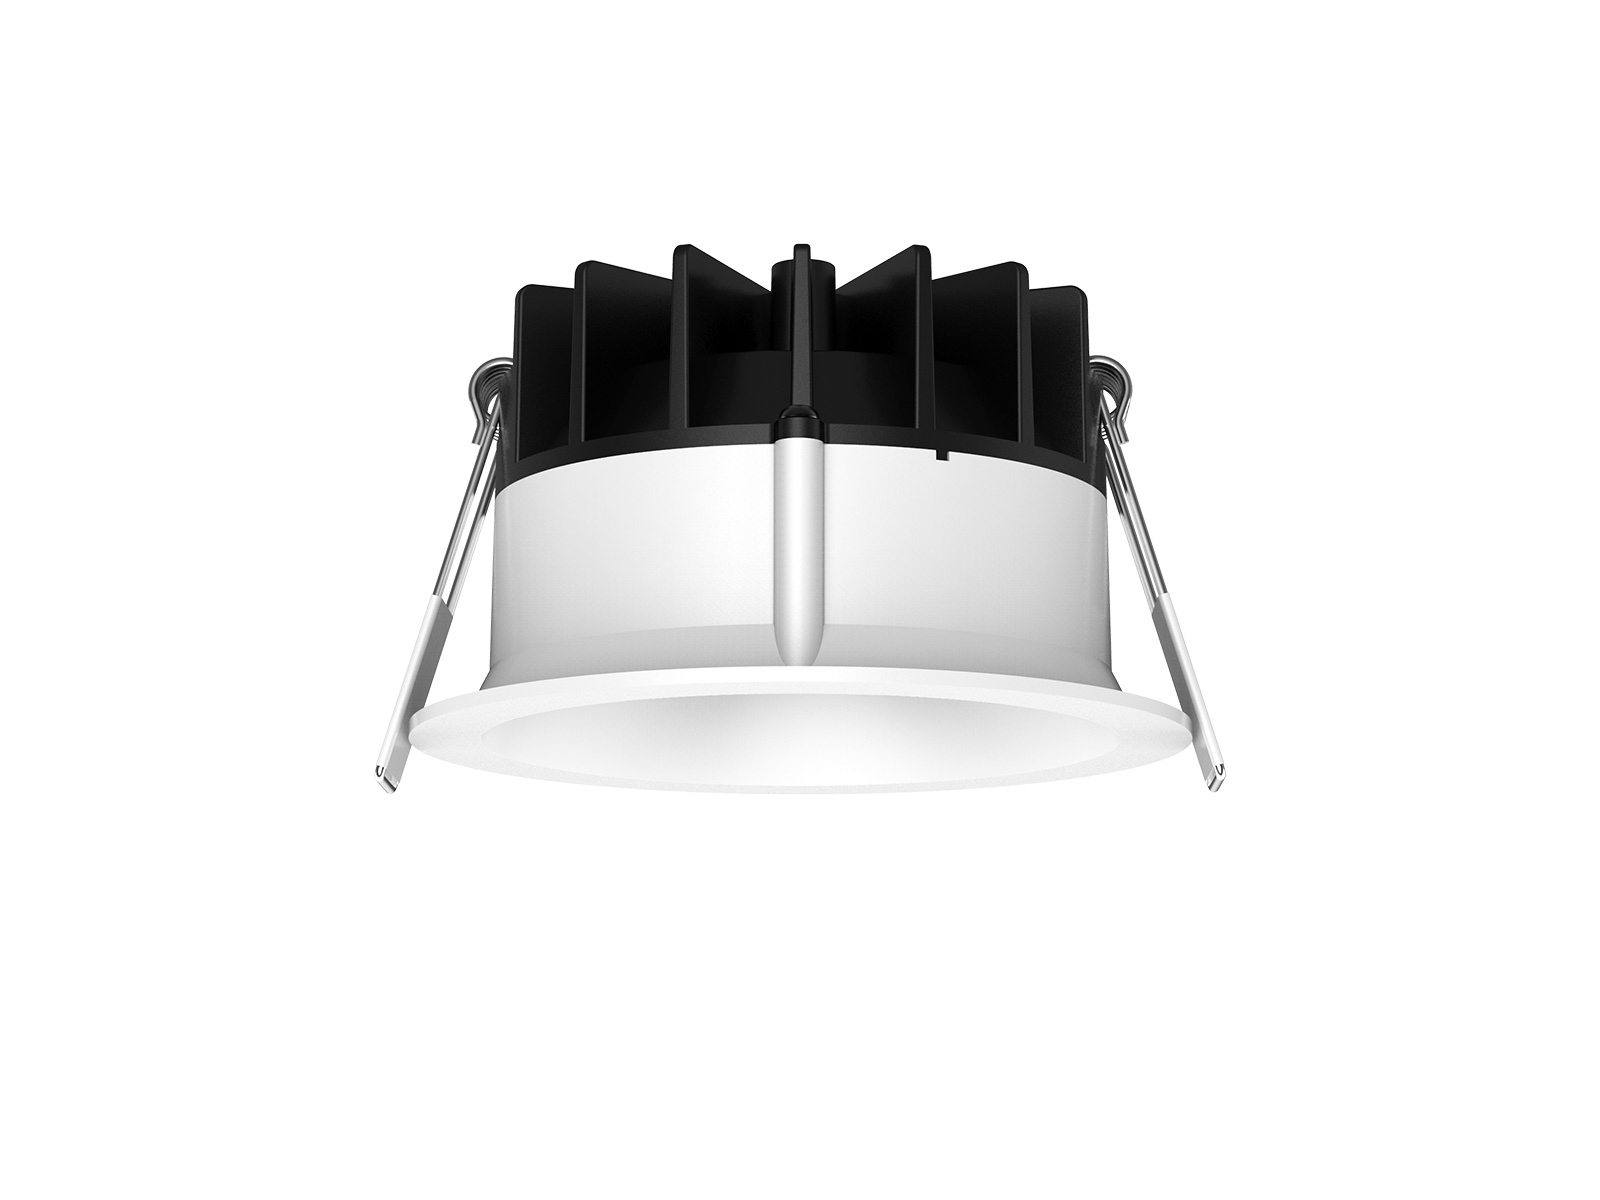 DL190 Ultra Slim design LED Recessed Downlight